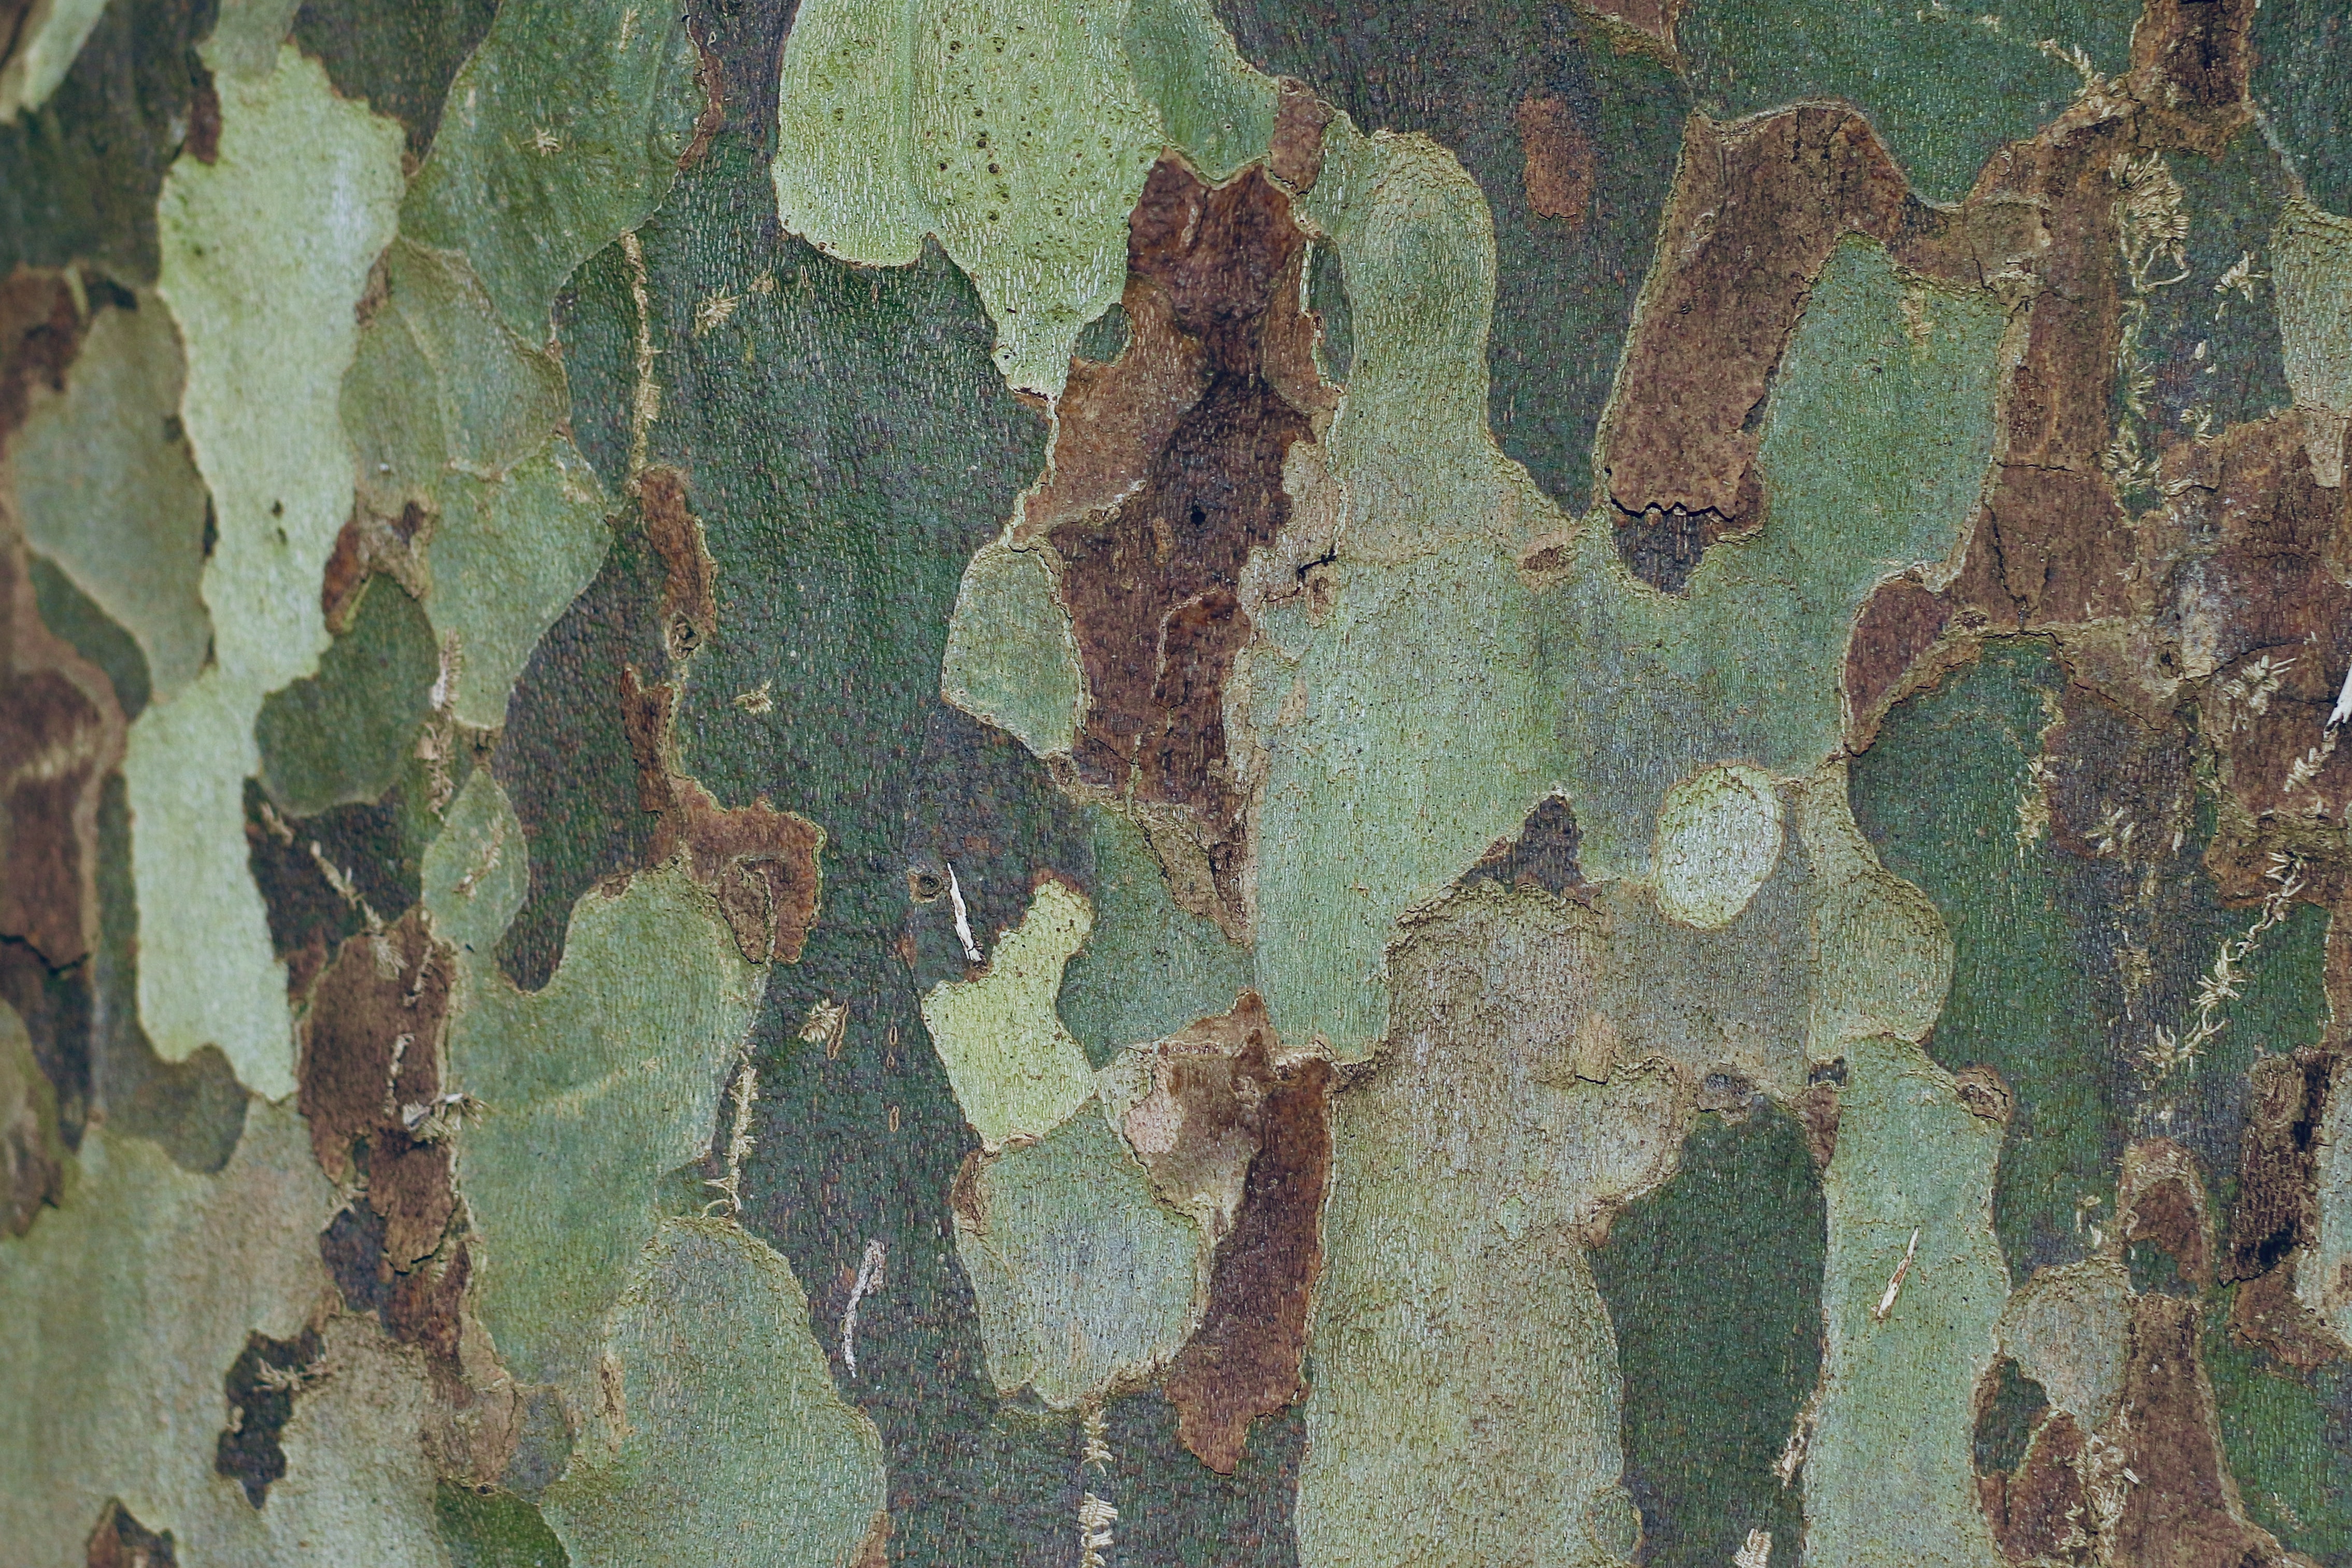 Tree bark that looks like cameo